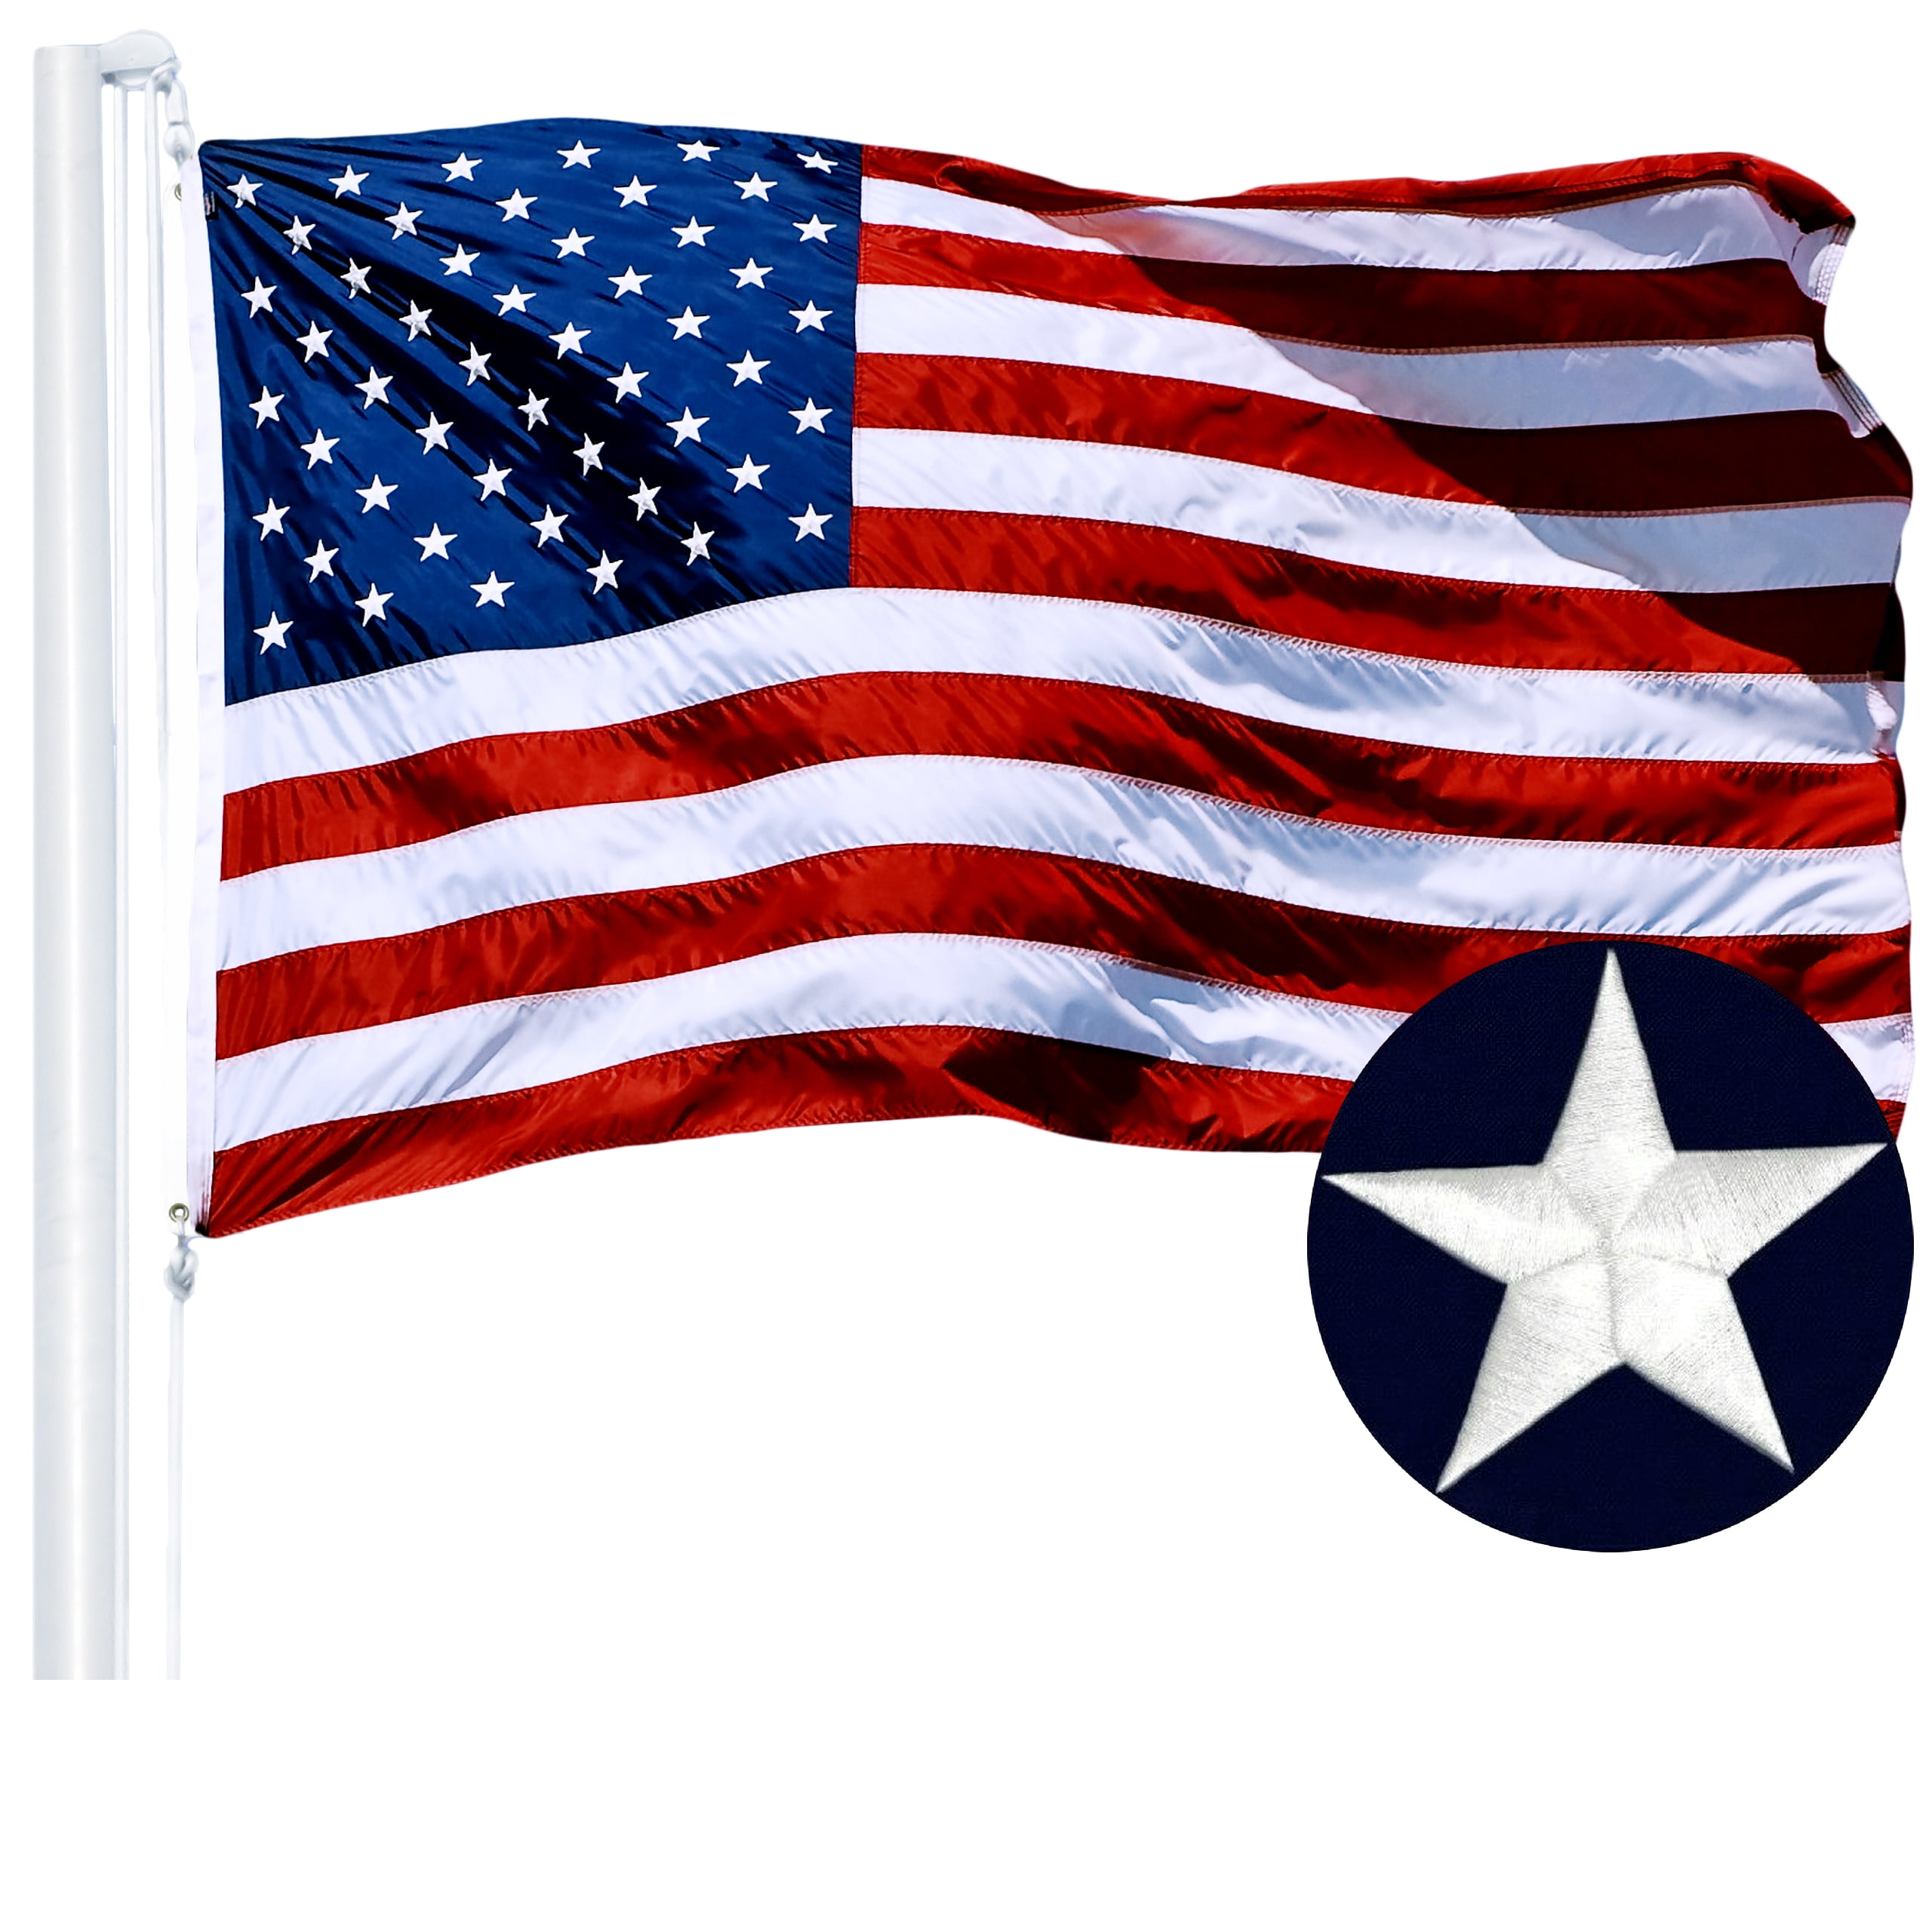 United States USA 210D-S Printed Nylon Premium Quality 3x5 3'x5' Flag Grommets 